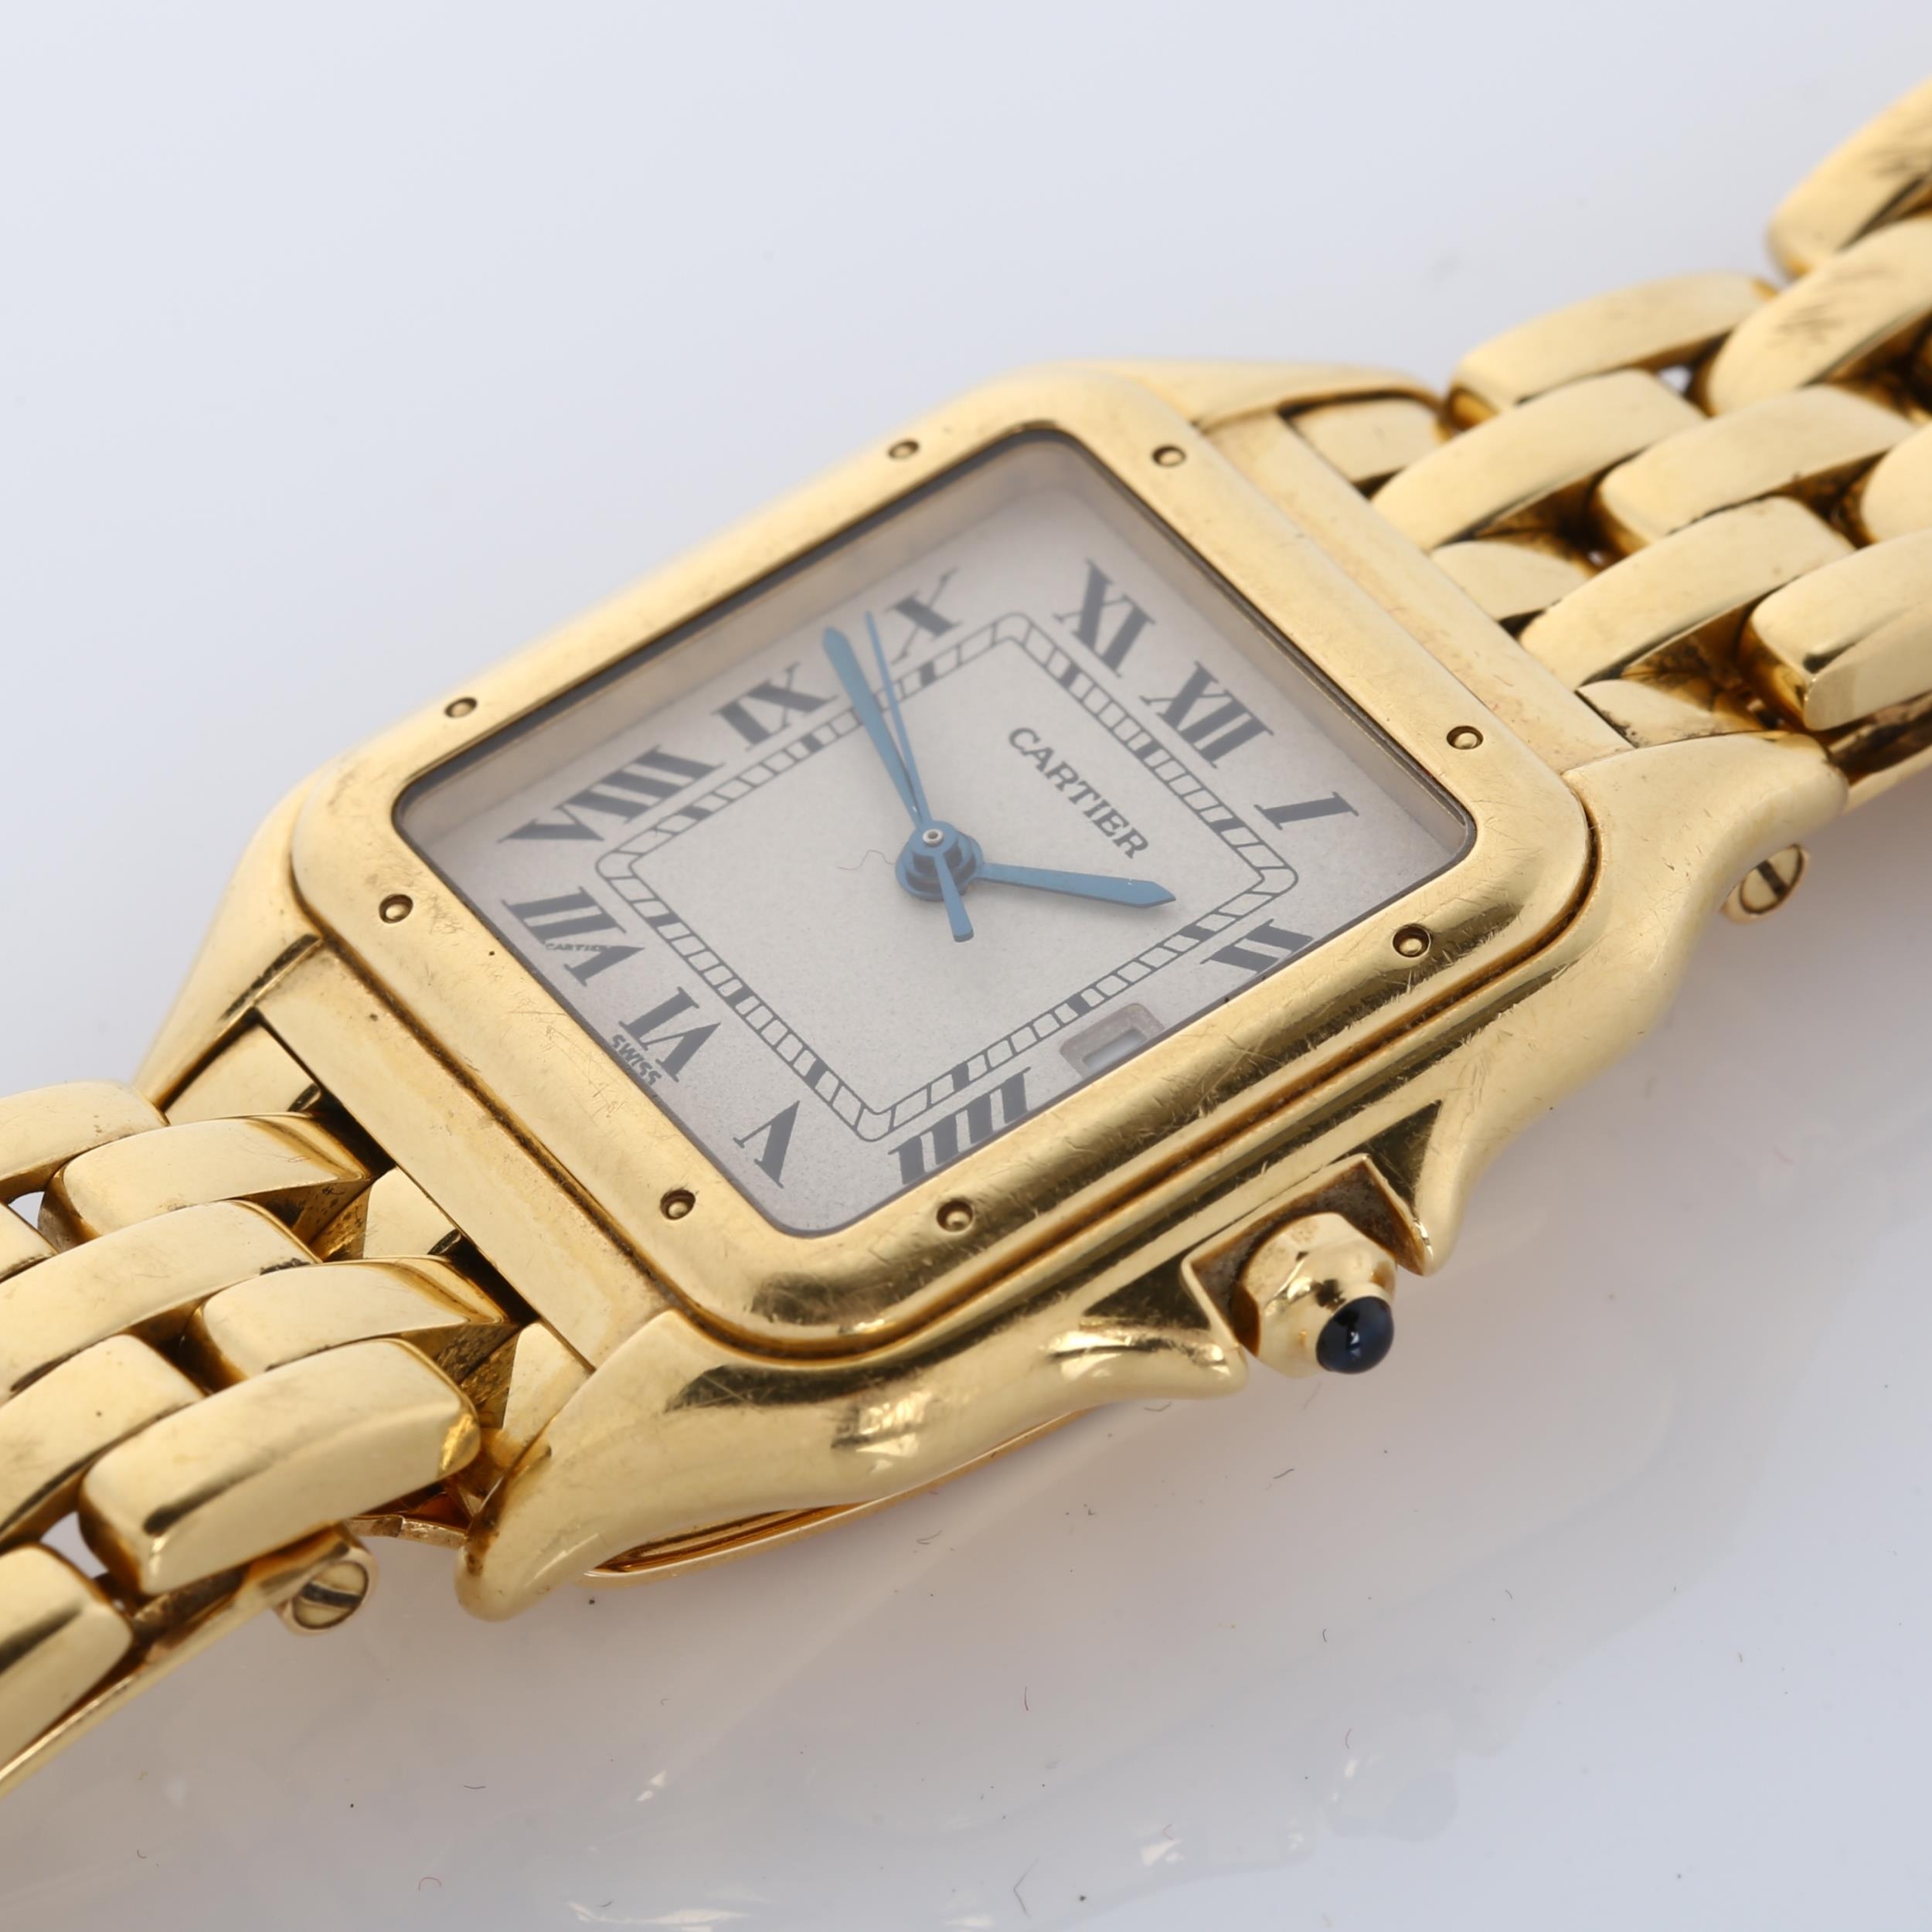 CARTIER - a mid-size 18ct gold Panthere quartz bracelet watch, ref. 8839, circa 1990s, pale - Image 2 of 7